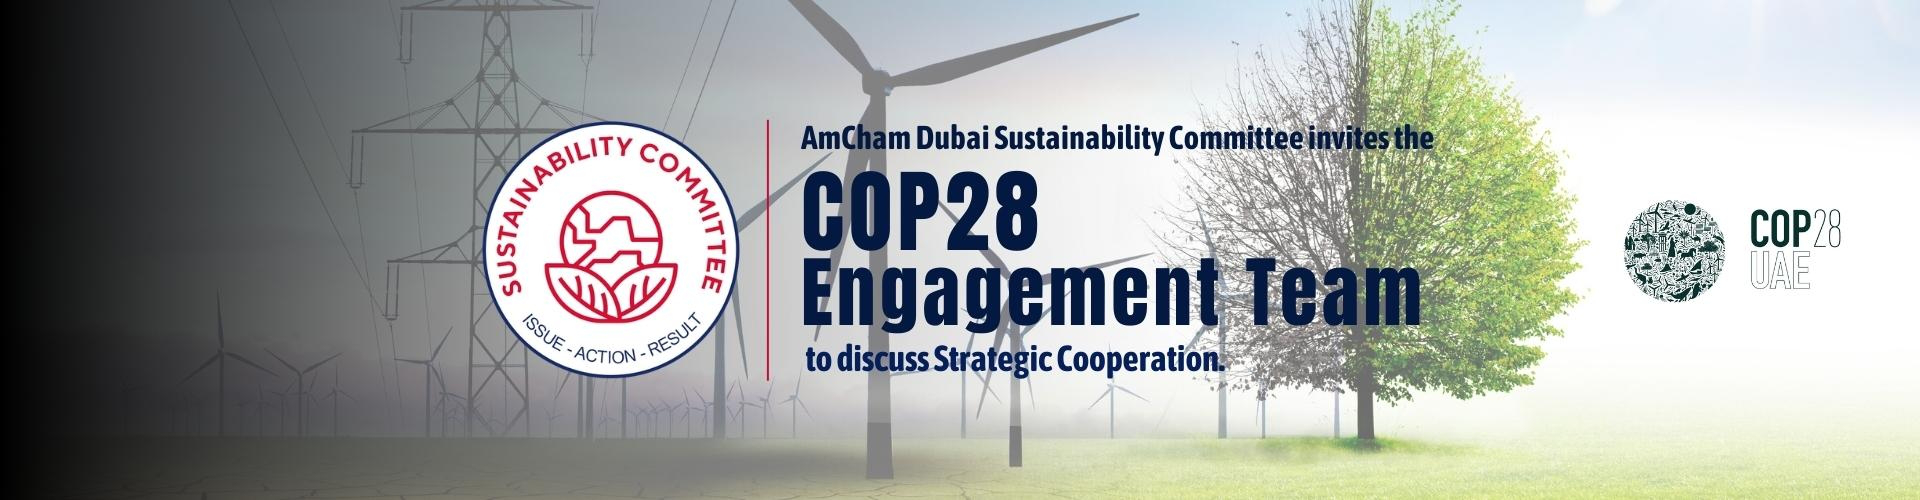 thumbnails AmCham Dubai's Sustainability Committee invites the COP28 Engagement Team to discuss Strategic Cooperation